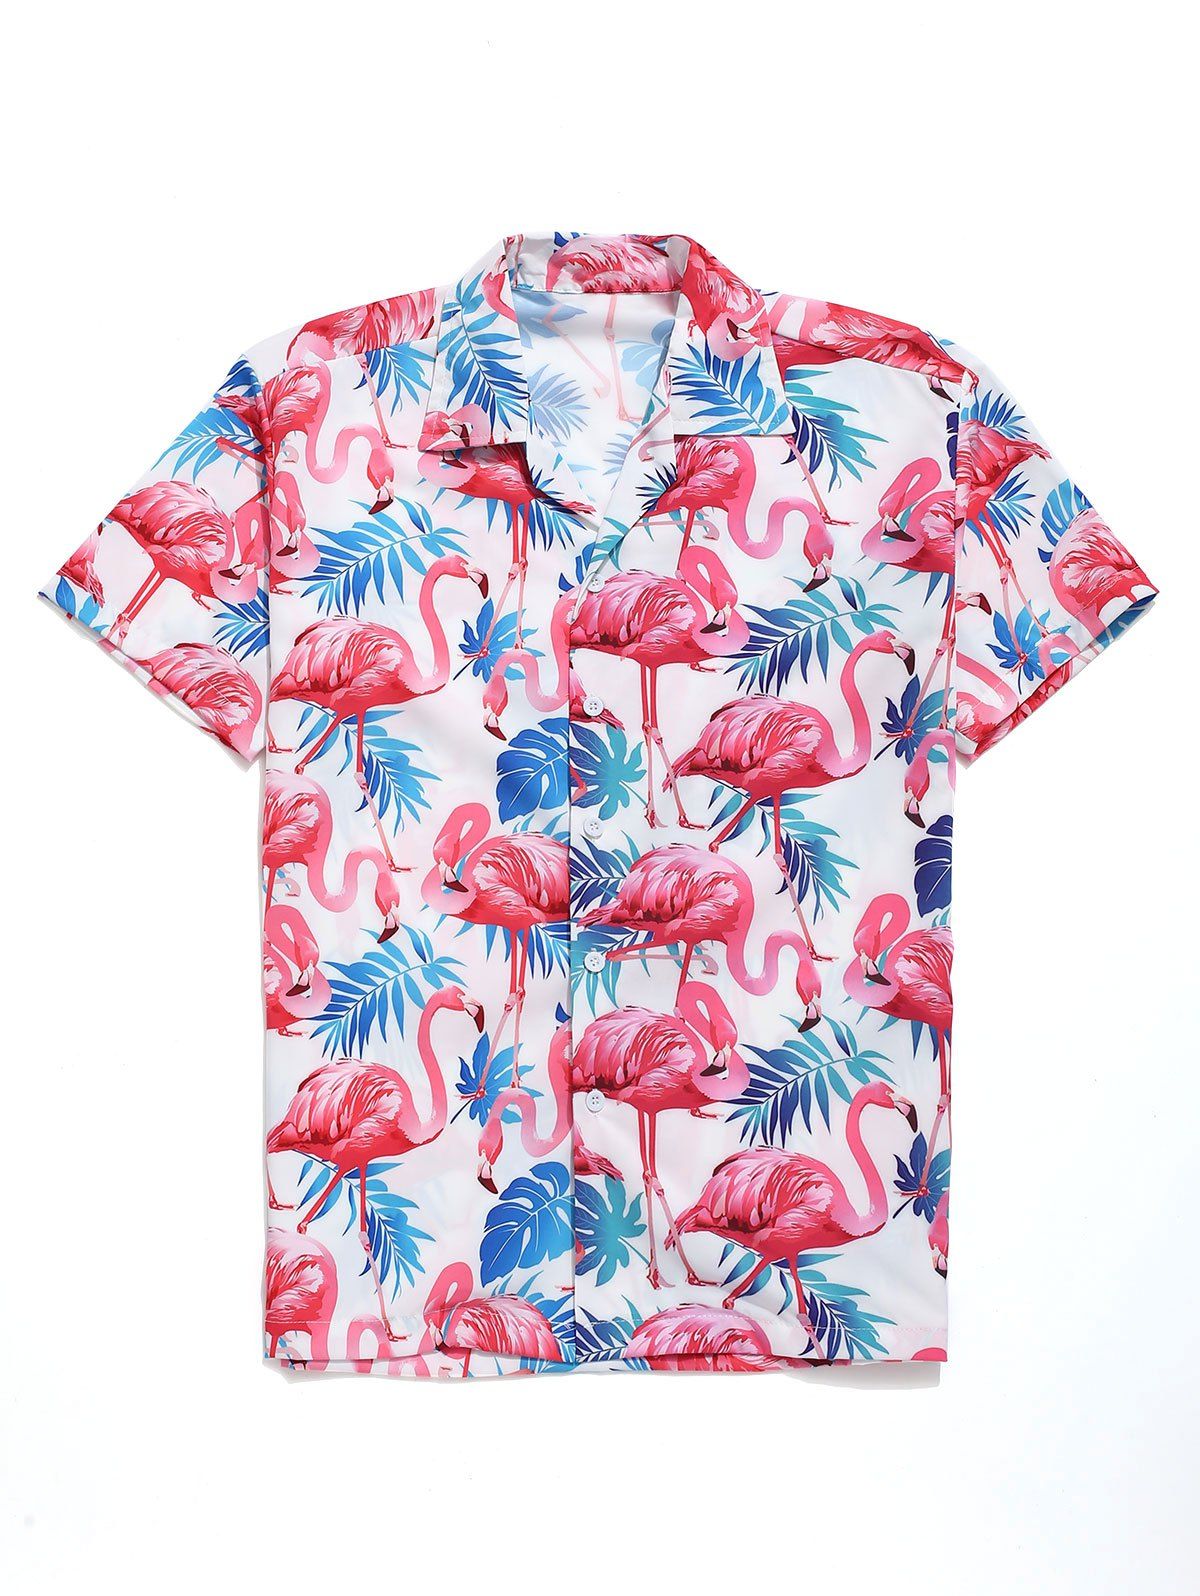 Fancy Tropical Leaves Flamingo Print Shirt  